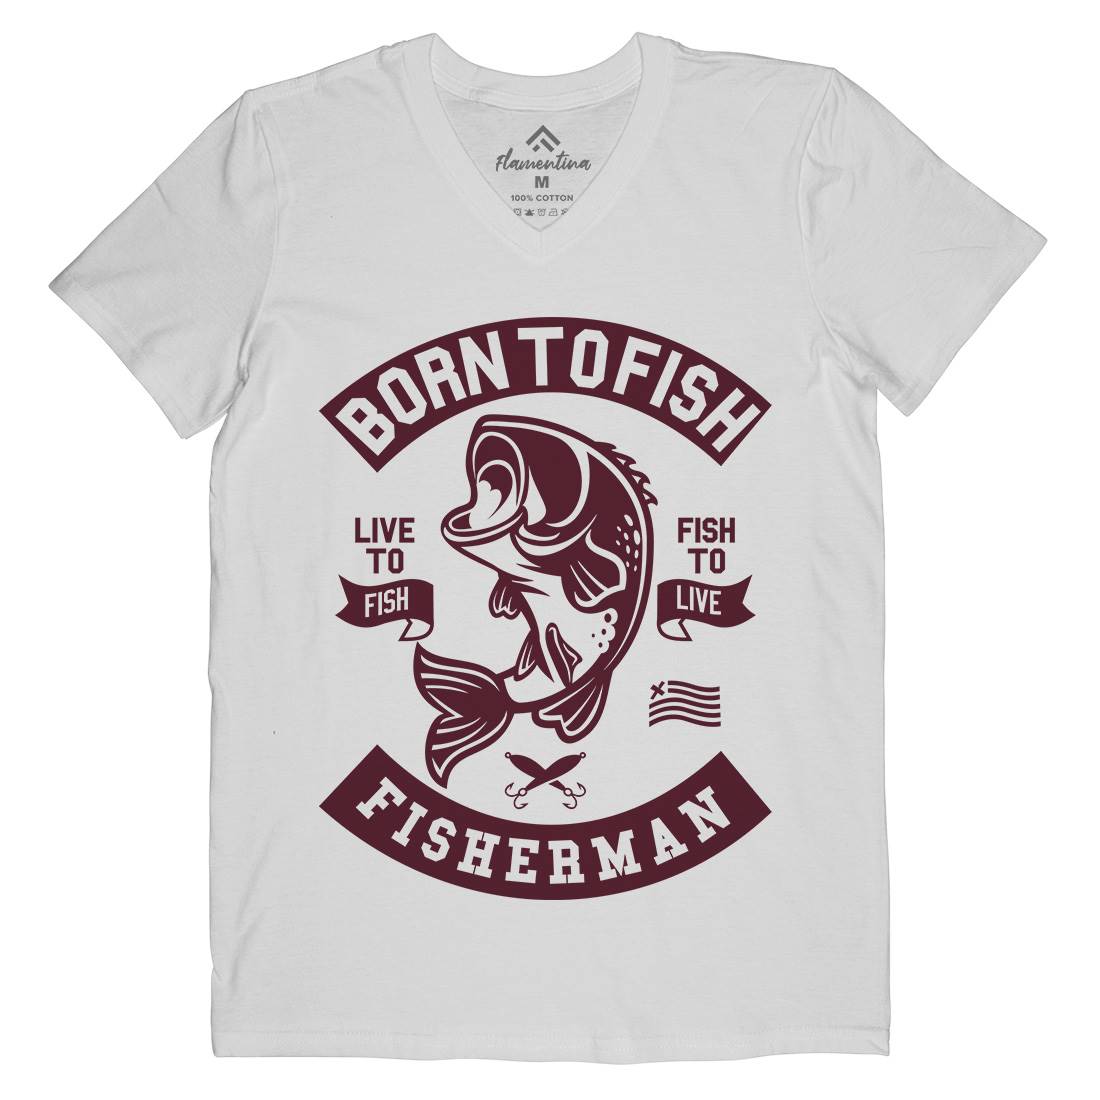 Born To Fish Mens Organic V-Neck T-Shirt Fishing A208